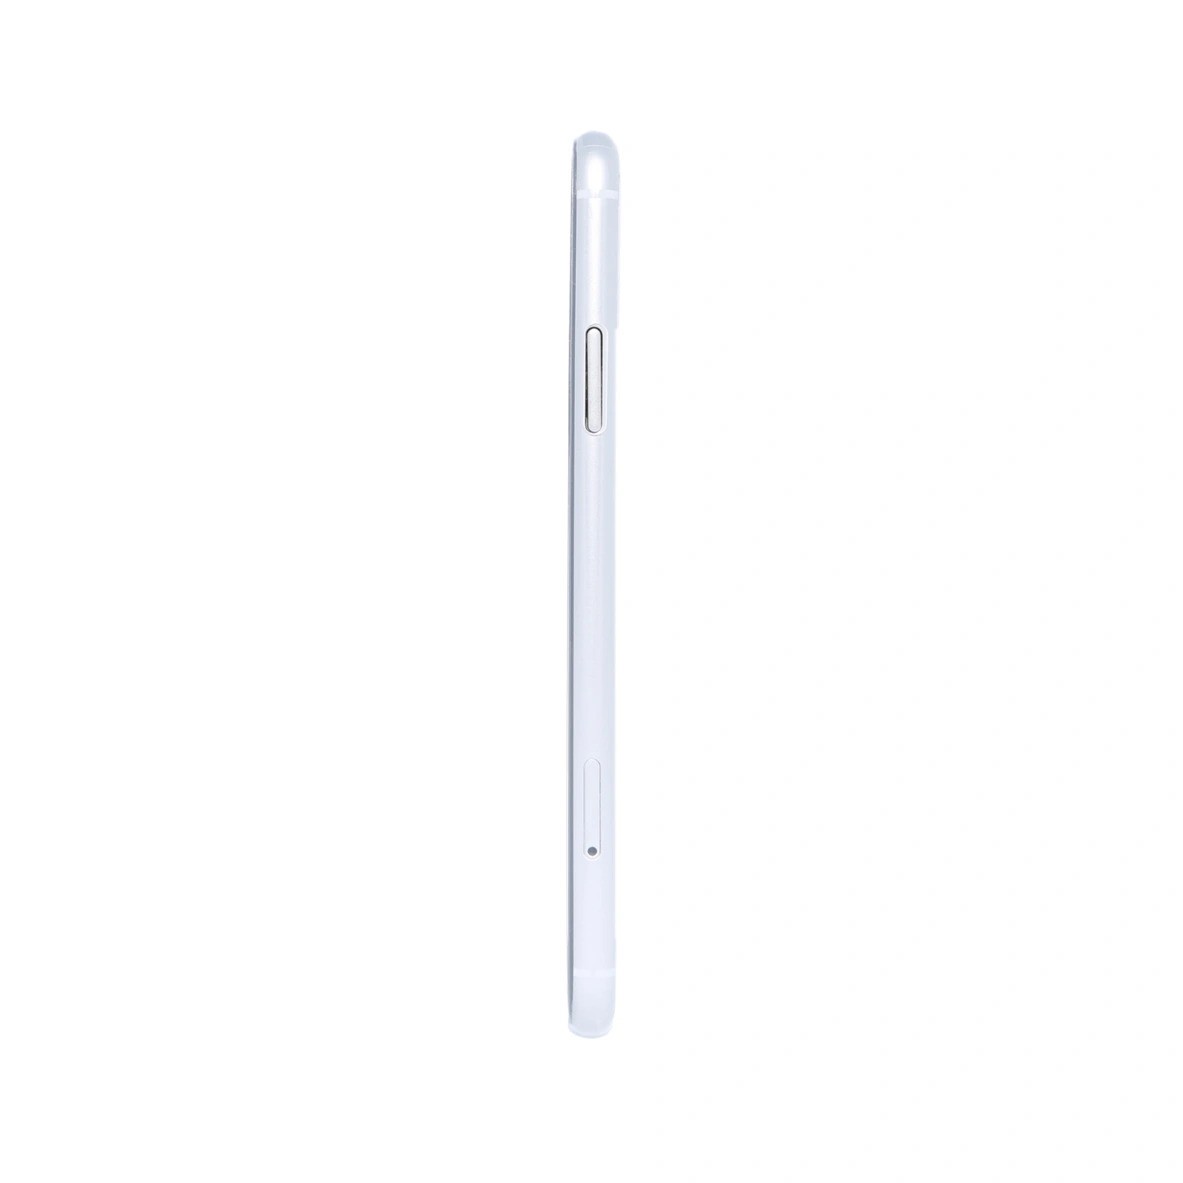 iPhone 11 Pro Max Ultra Thin Phone Case